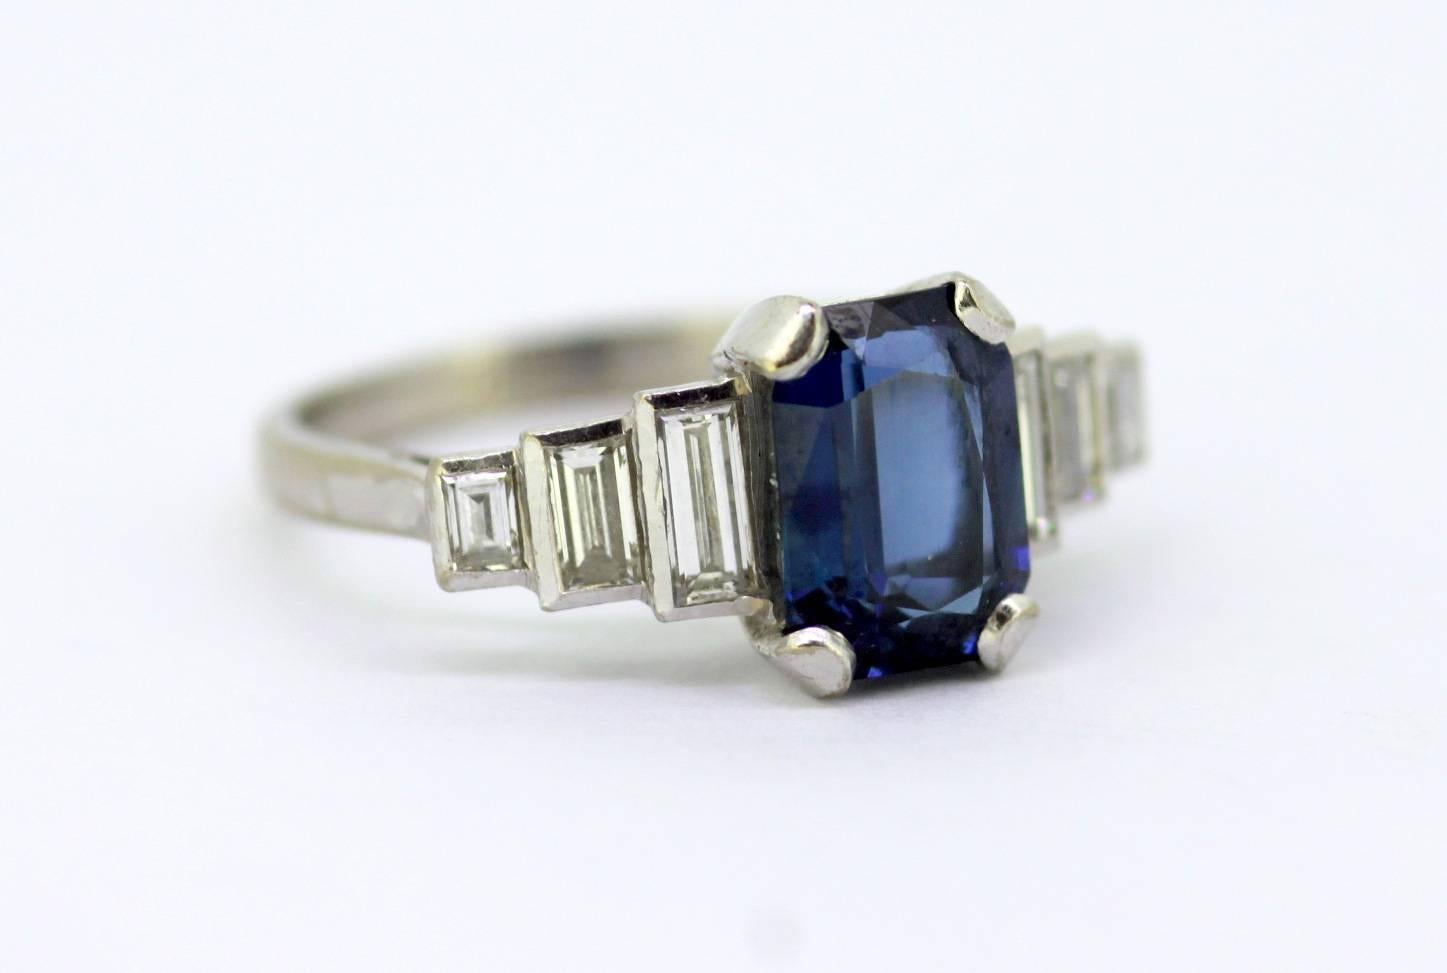 Vintage 18k white gold ladies ring with blue sapphire & diamonds,
c.1970's

Dimensions -
Finger Size: (UK) = M (US) = 6 1/2 (EU) = 52 1/2
Weight: 4 g
Ring Size : 2.4 x 2 x 0.95 cm

Diamond - 
Cut : Baguette
Number of Diamonds : 6
Carrat : 0.36 CT